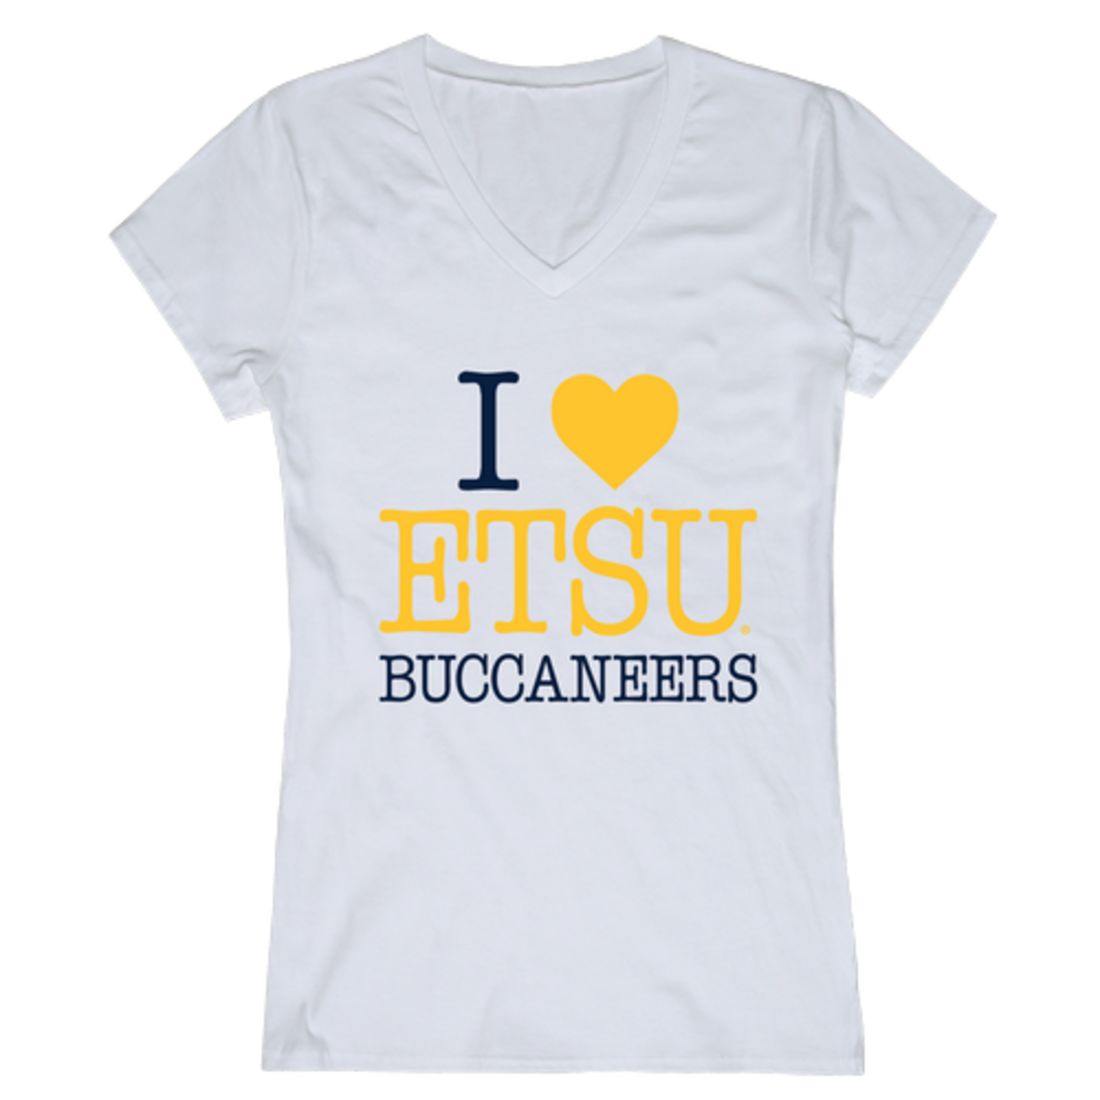 I Love ETSU East Tennessee State University Buccaneers Womens T-Shirt-Campus-Wardrobe